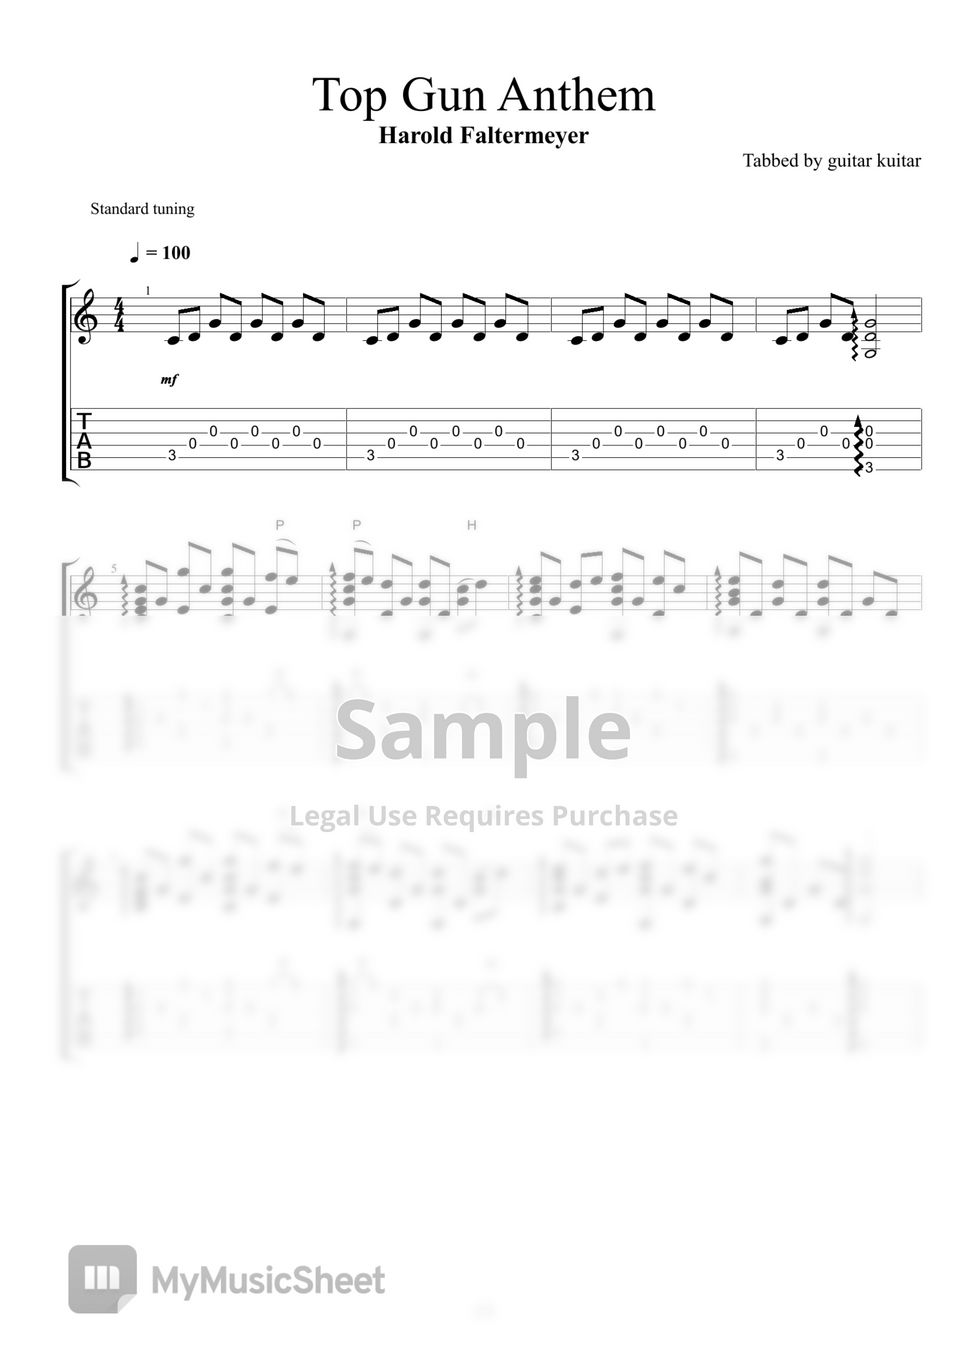 Top Gun Anthem - Easy Ukulele Fingerpicking Tab - FINGERSTYLE GUITAR